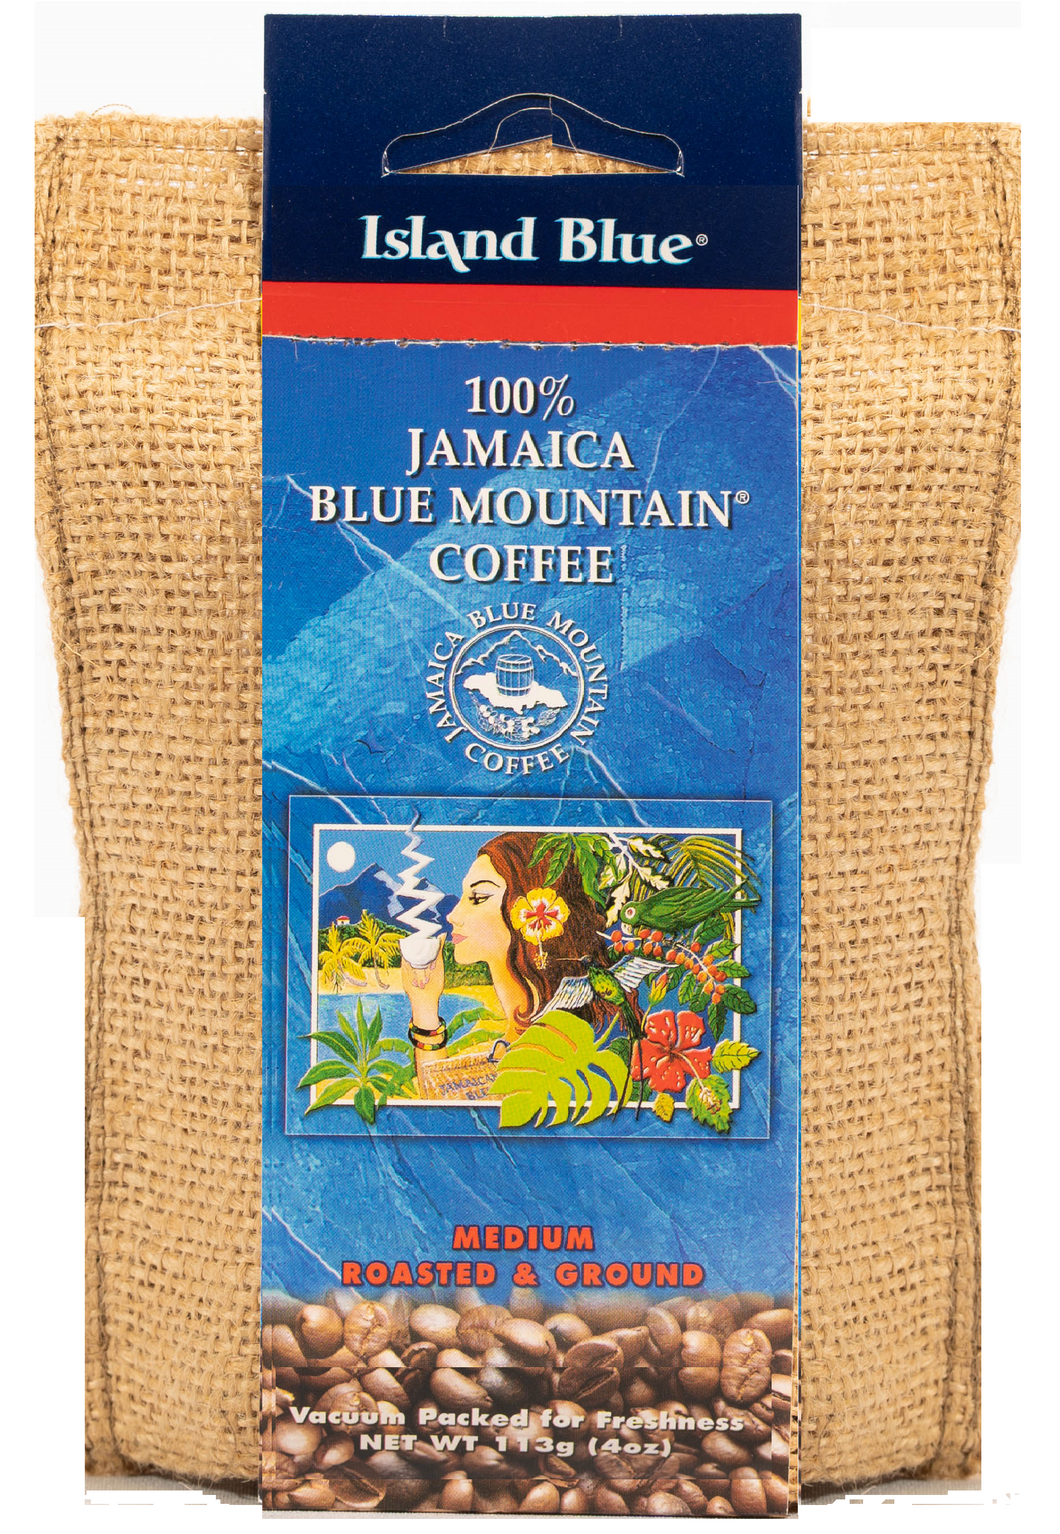 Island Blue® Jamaica Blue Mountain® Coffee 8oz Roasted & Ground (Medium)